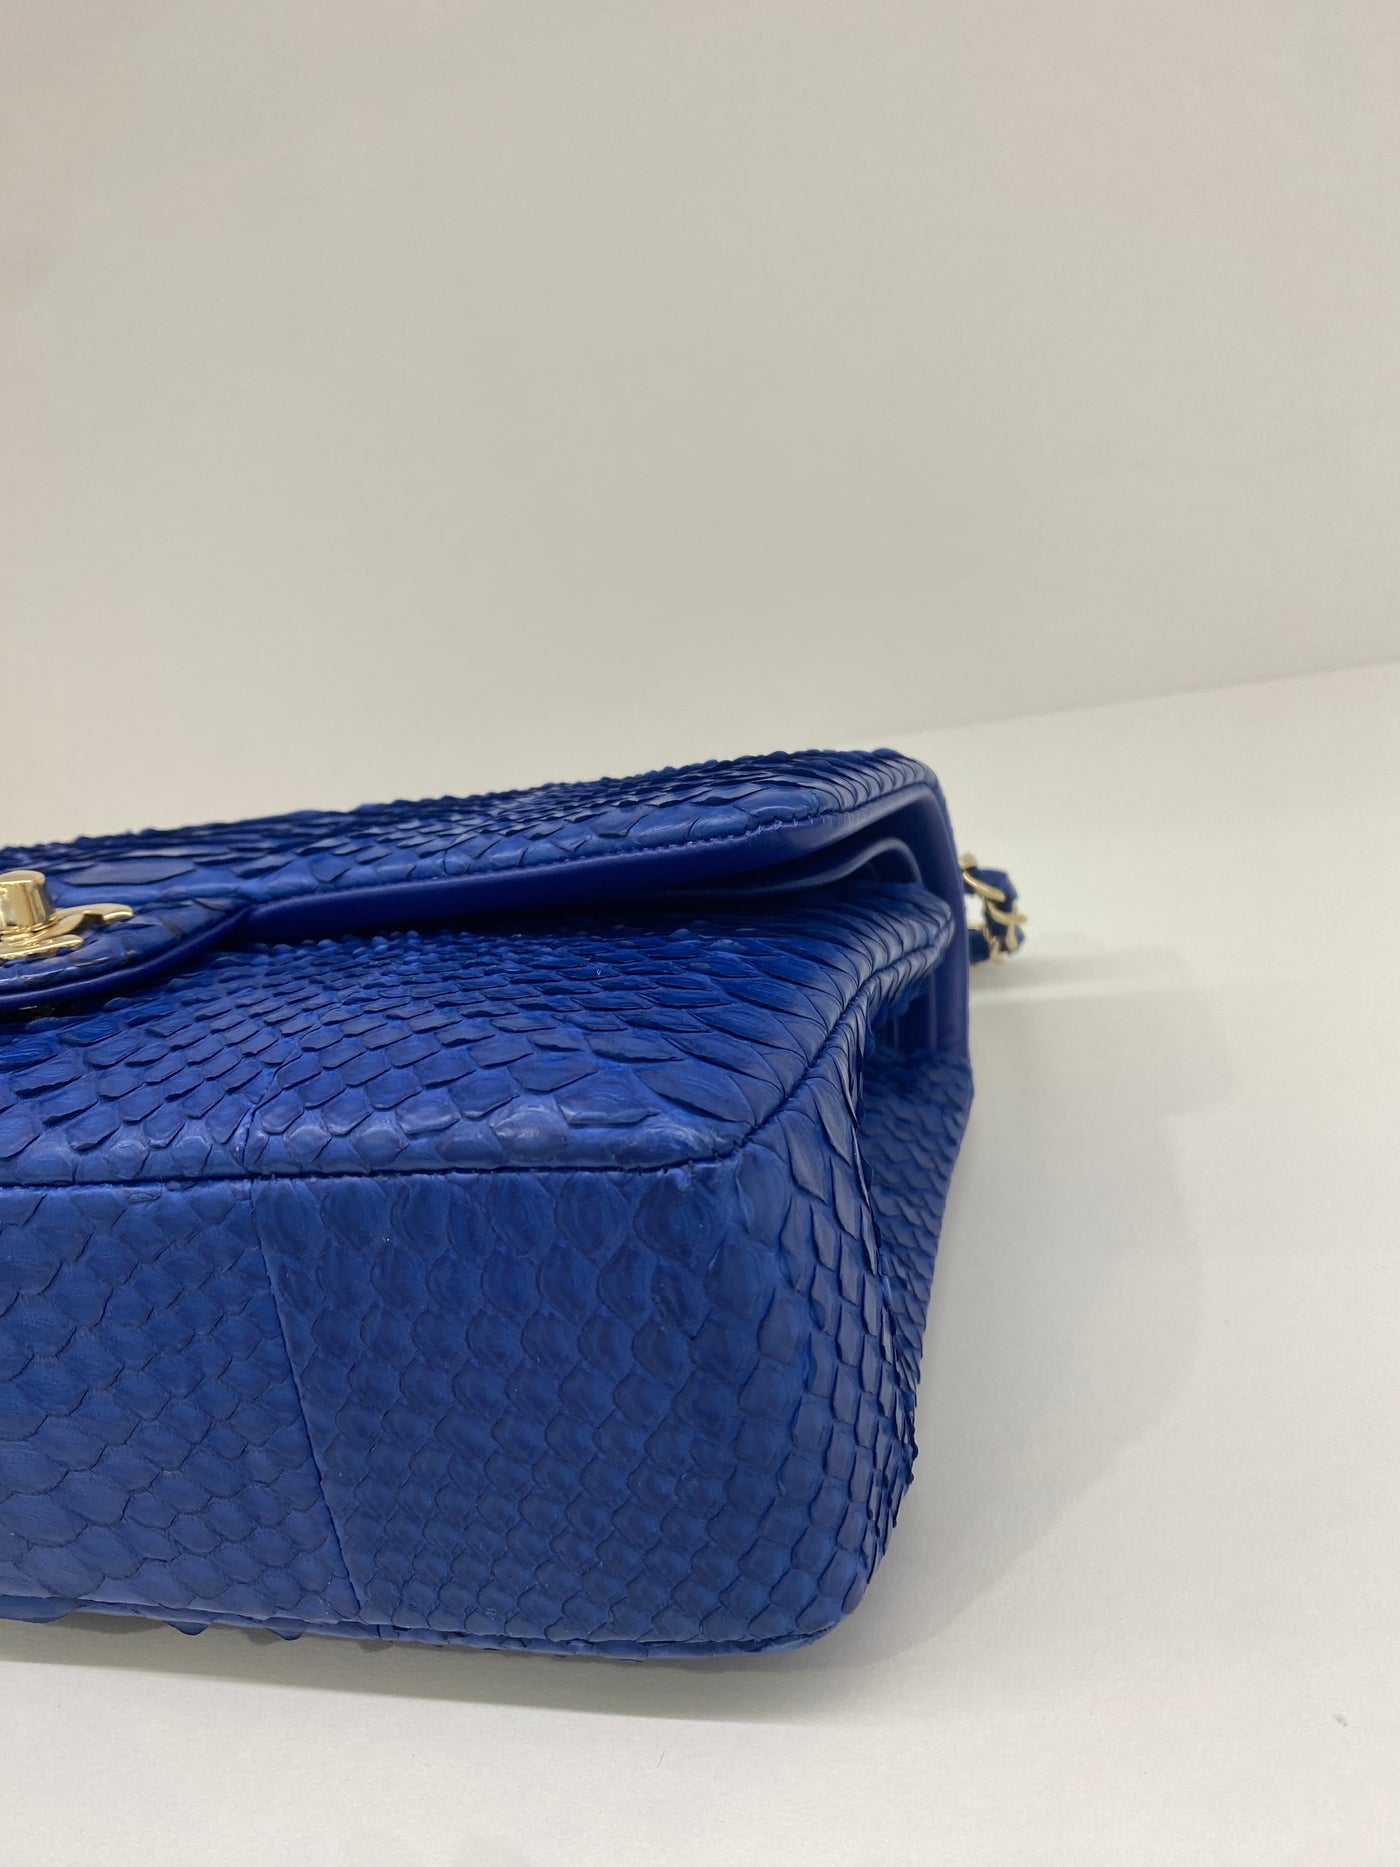 Chanel Classic Flap Medium - Blue Snakeskin SHW (series 22)